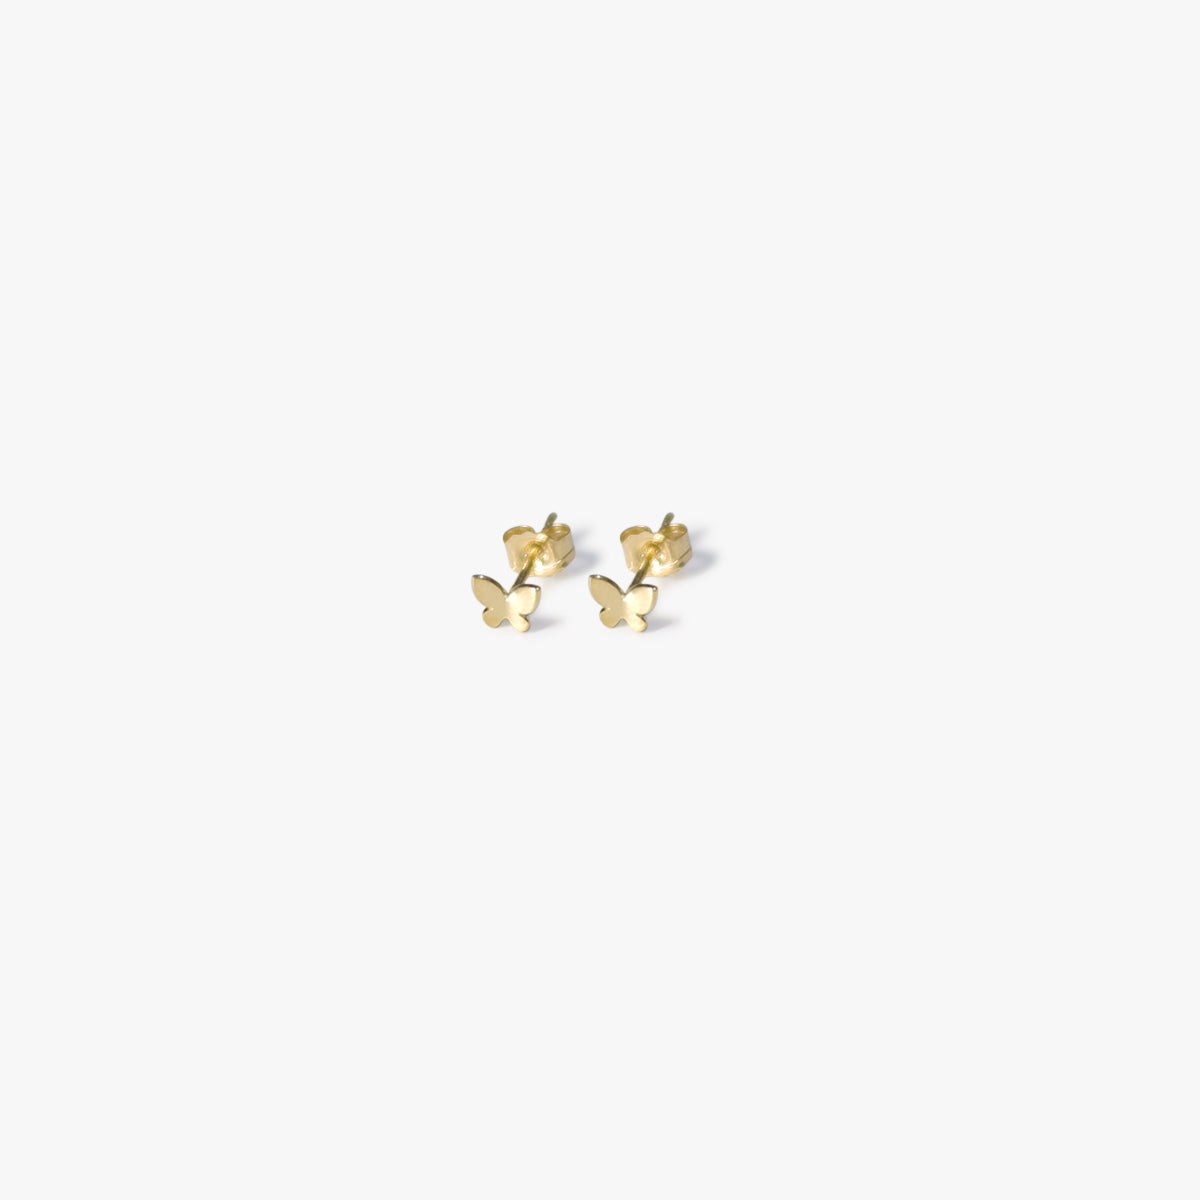 The Mini Butterfly Earrings in Solid Gold